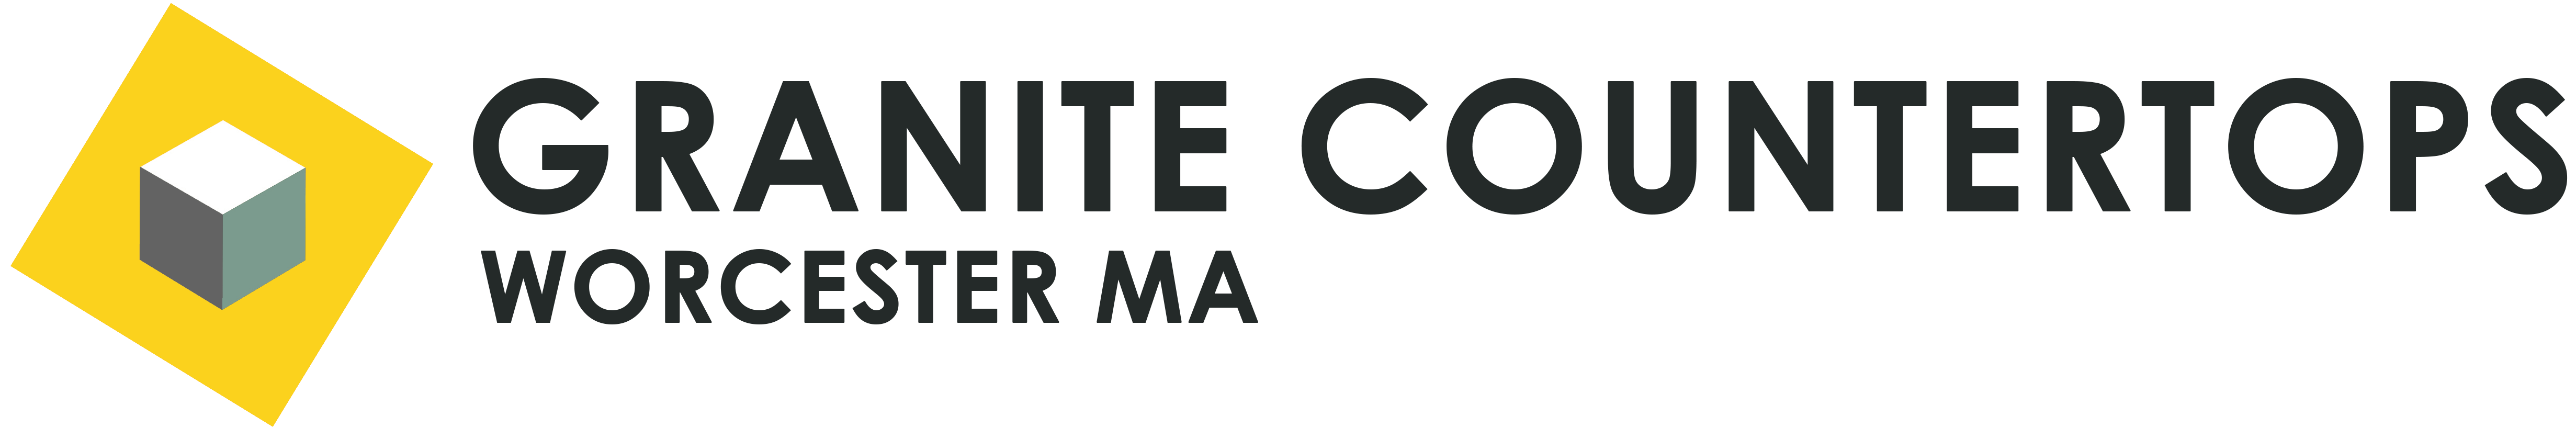 Granite Countertop Worcester Ma's Logo